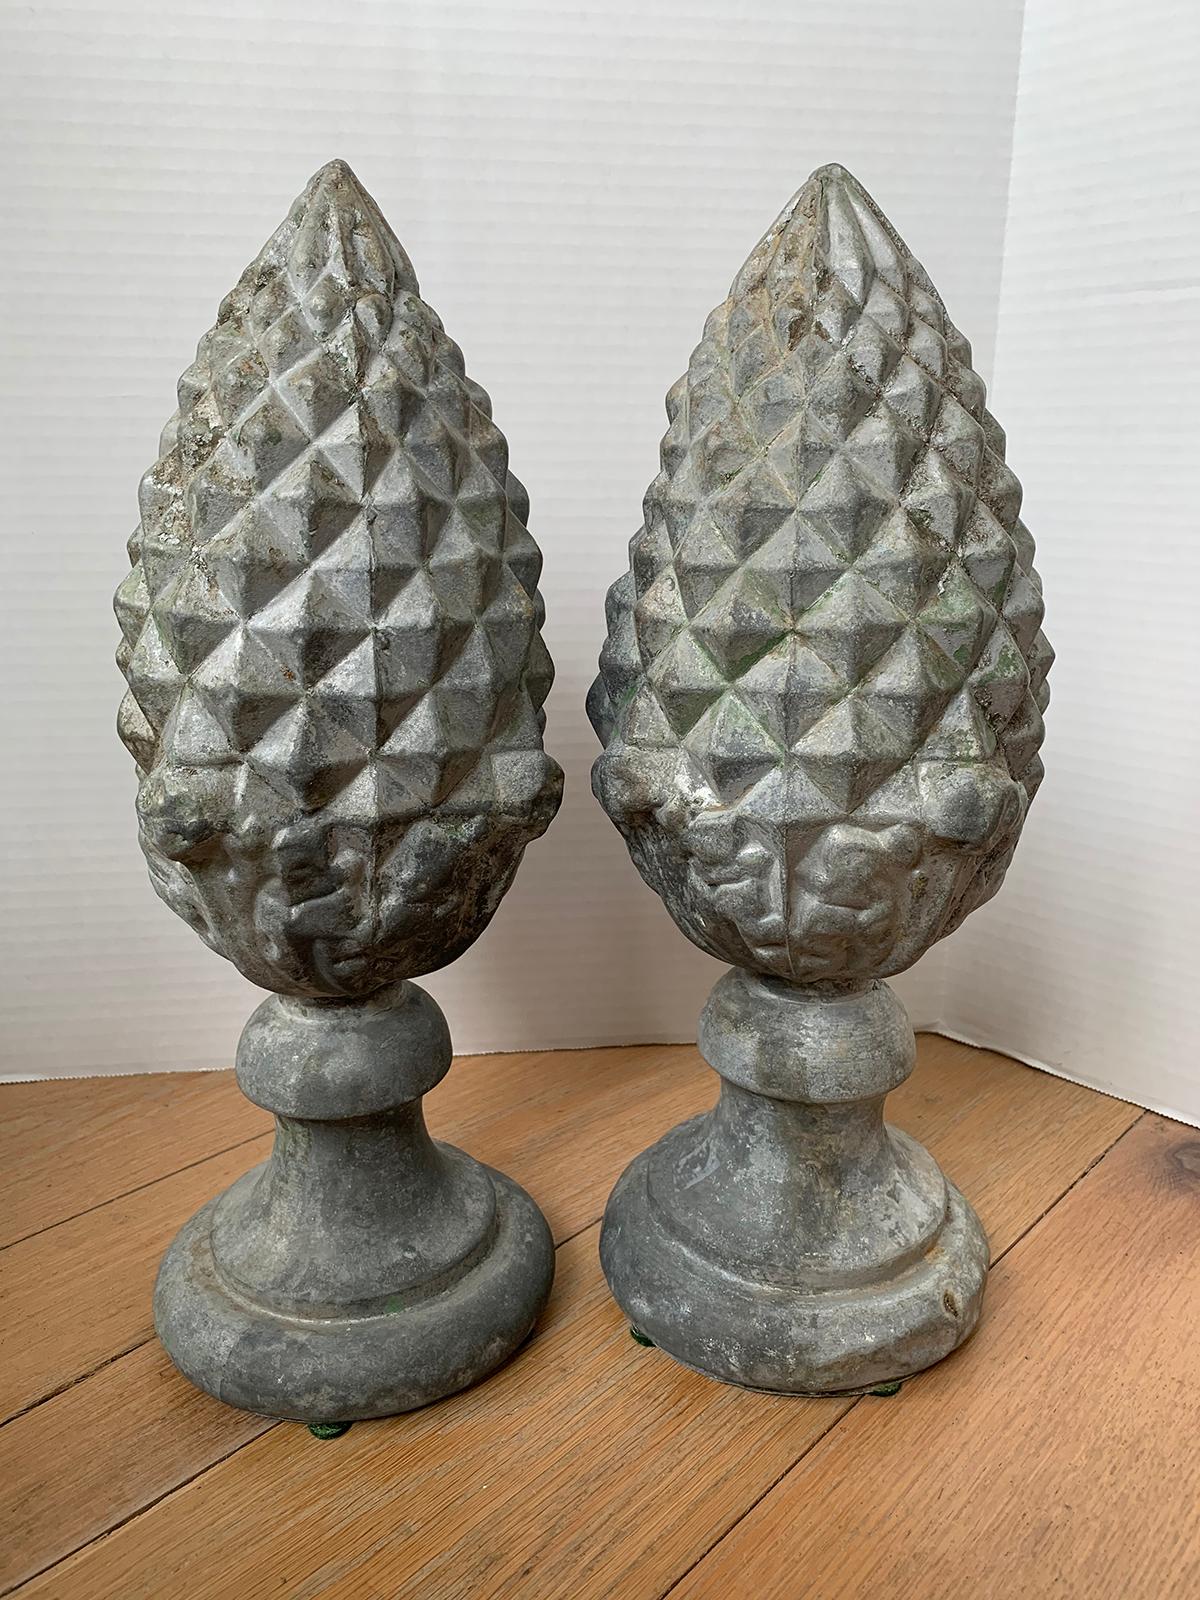 Pair of 19th-20th century zinc pineapple finials.